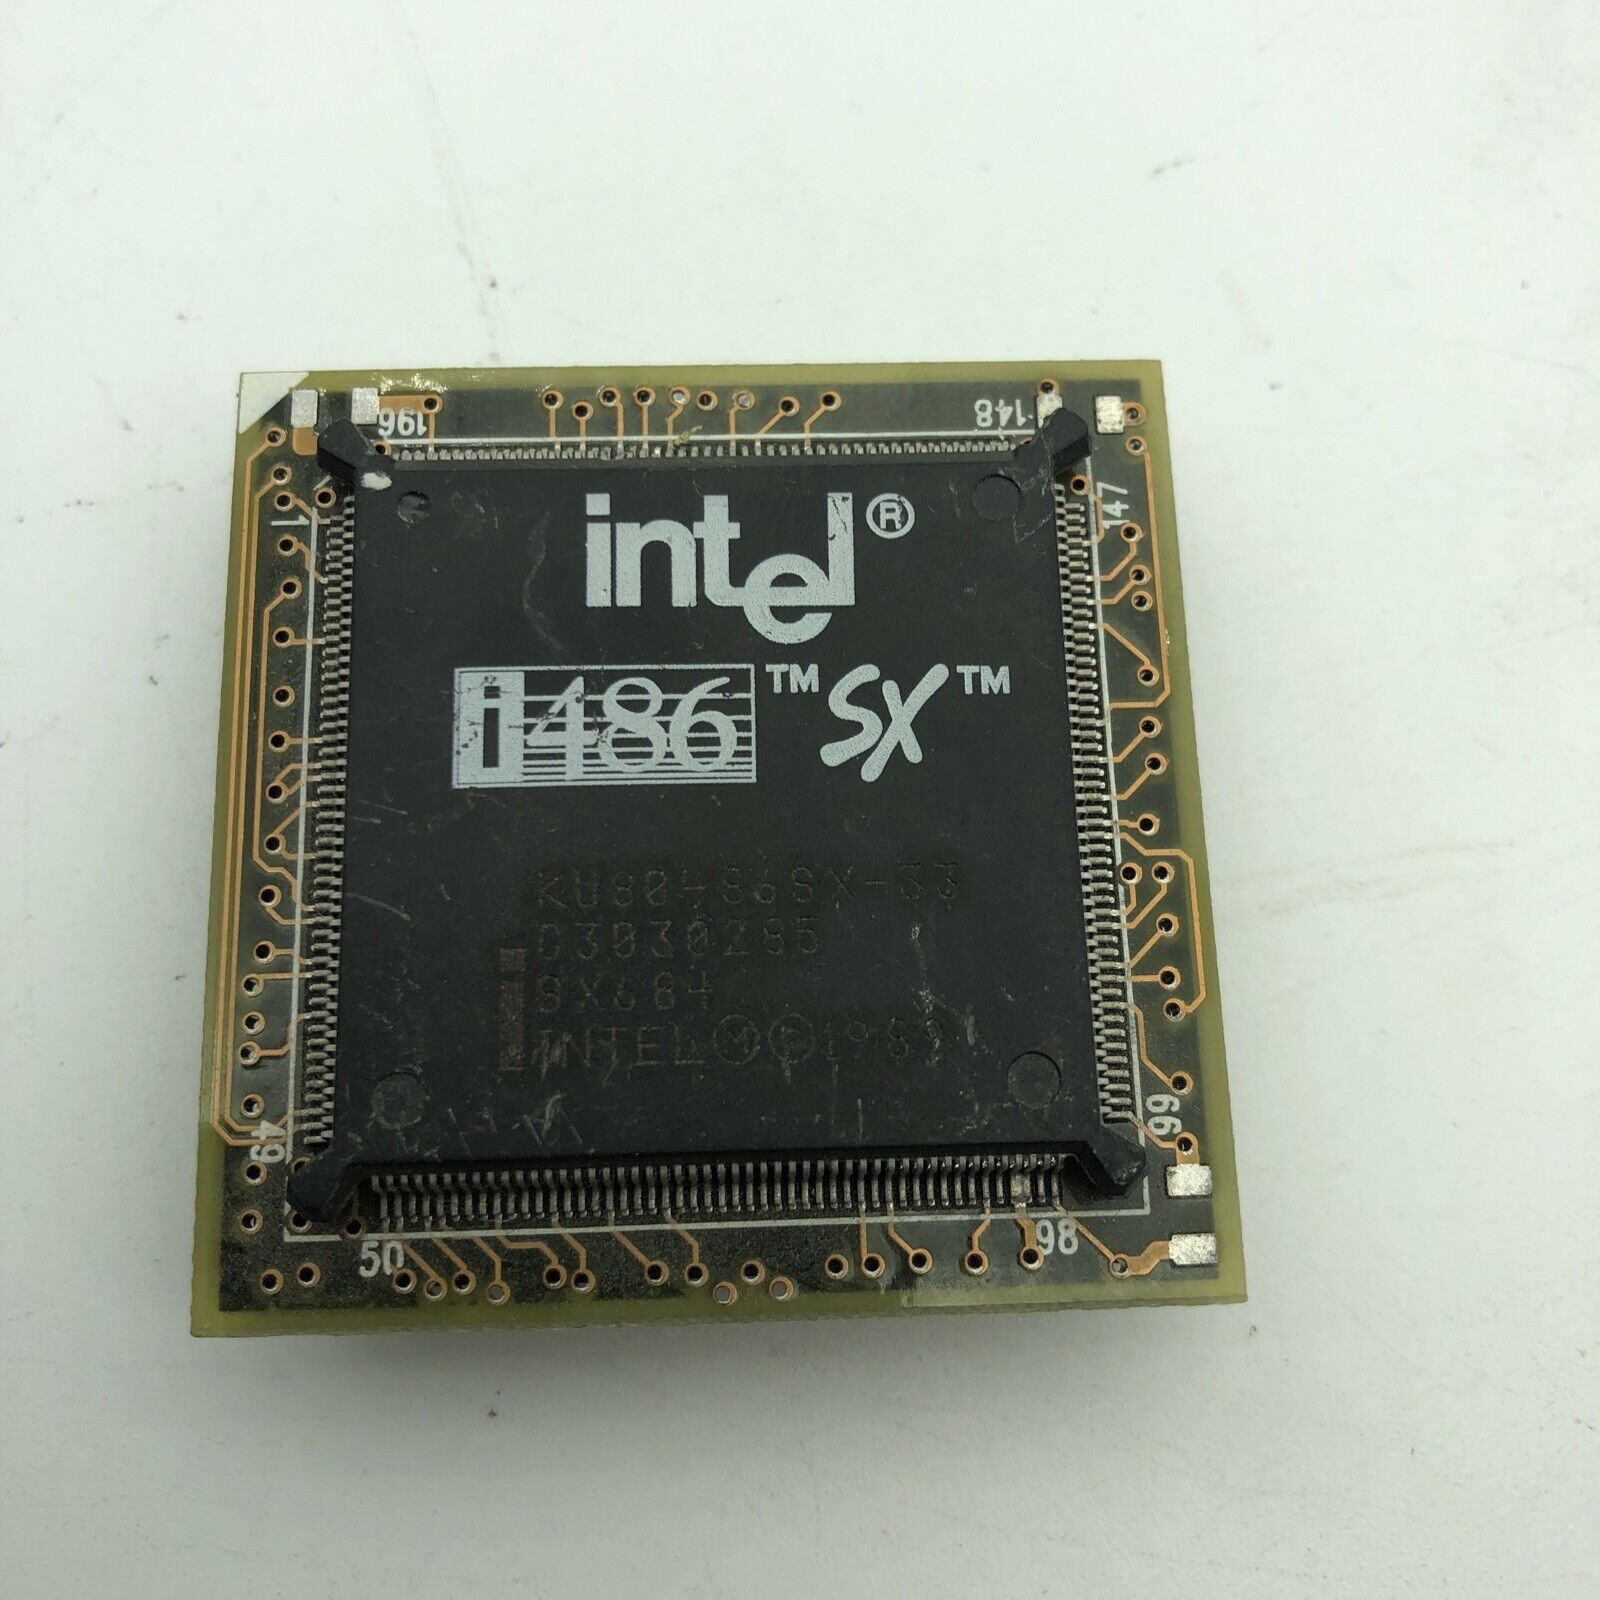 INTEL 486SX 33mhz CPU Processor A80486SX-33 1989 Vintage PGA SX684 SX587